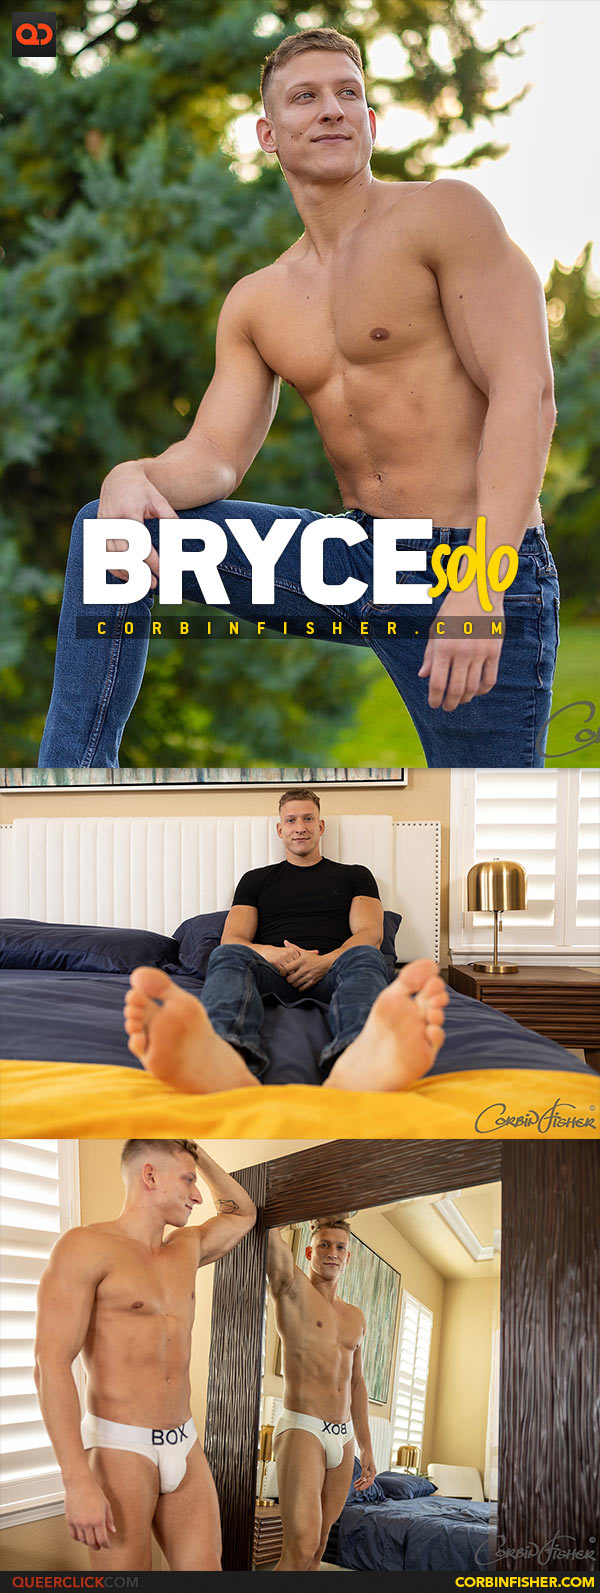 Corbin Fisher: Introducing Bryce